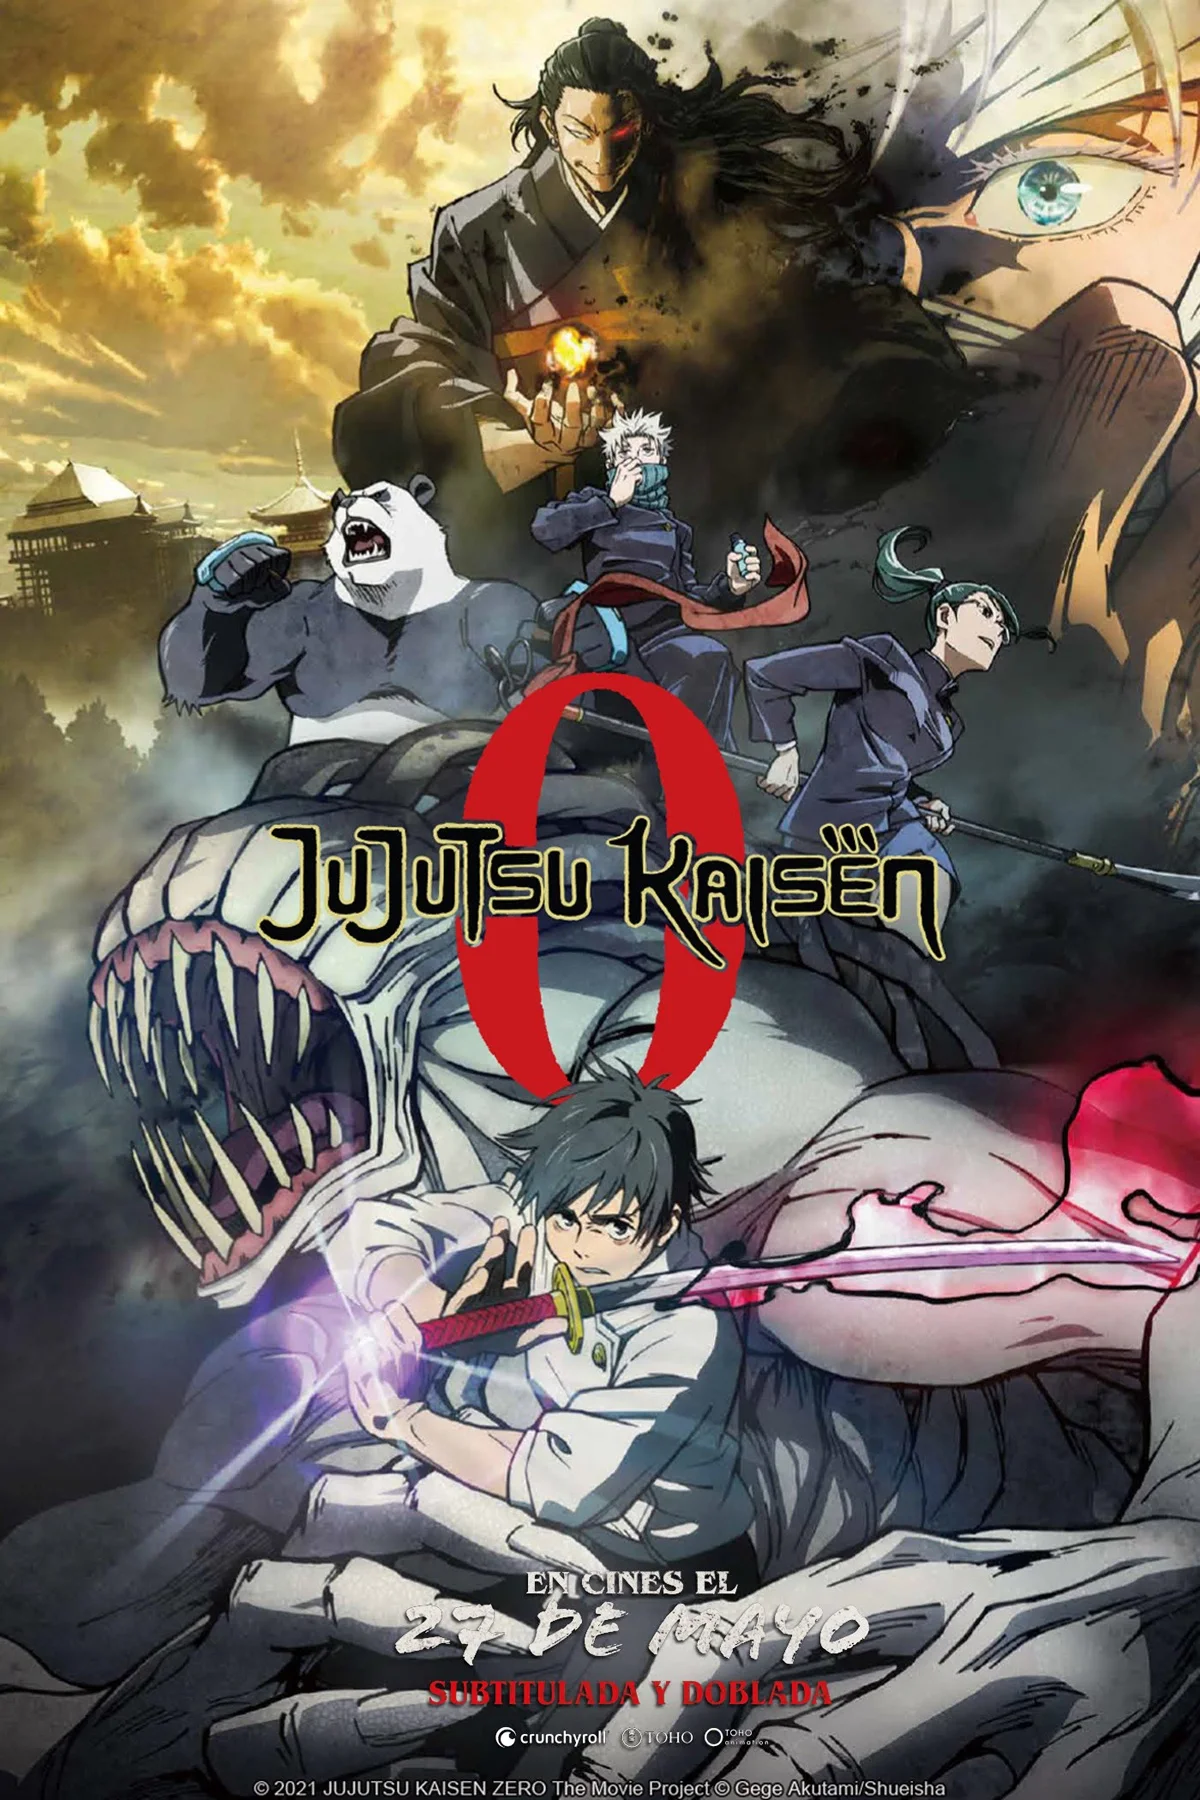 ANIME-se on X: Ordem cronológica de Jujutsu Kaisen: - 2ª